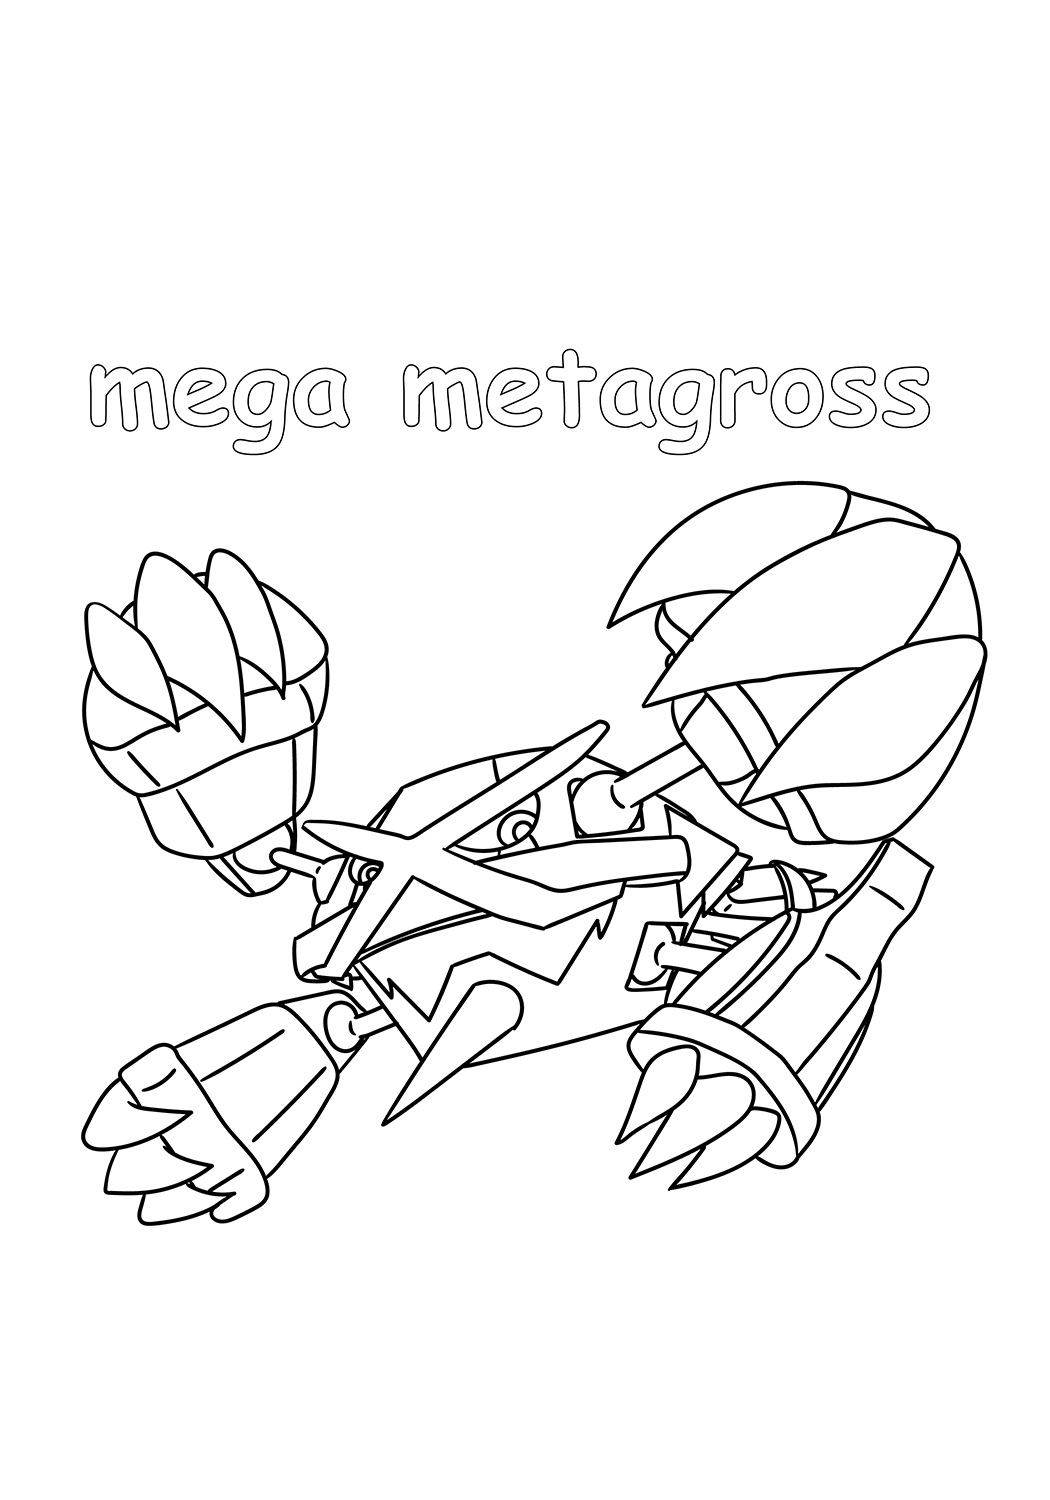 metagross